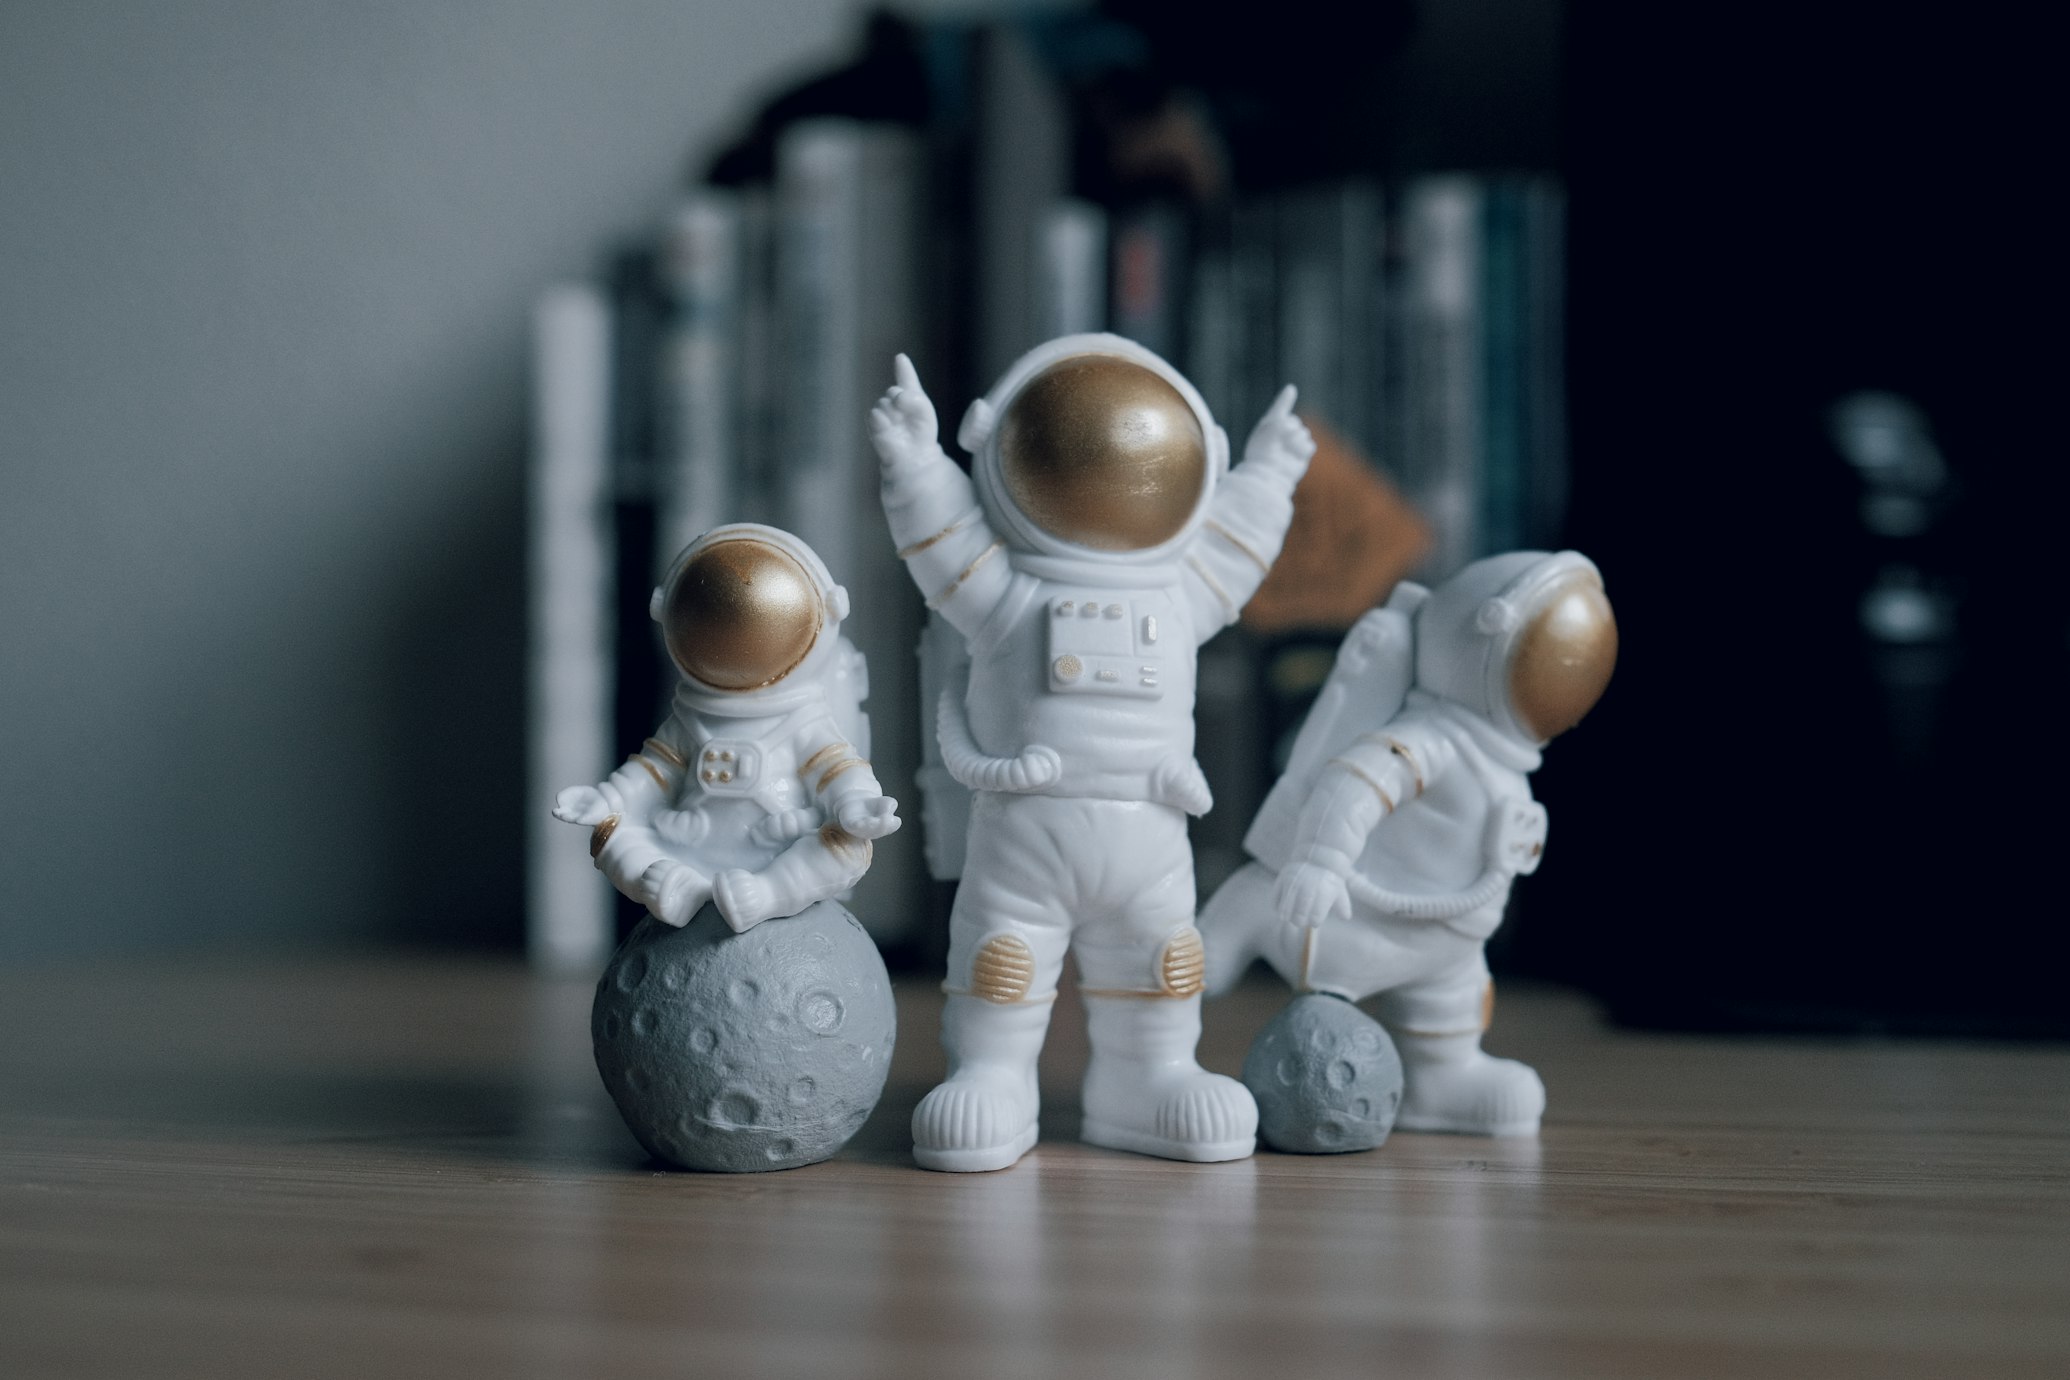 Astronauts Image